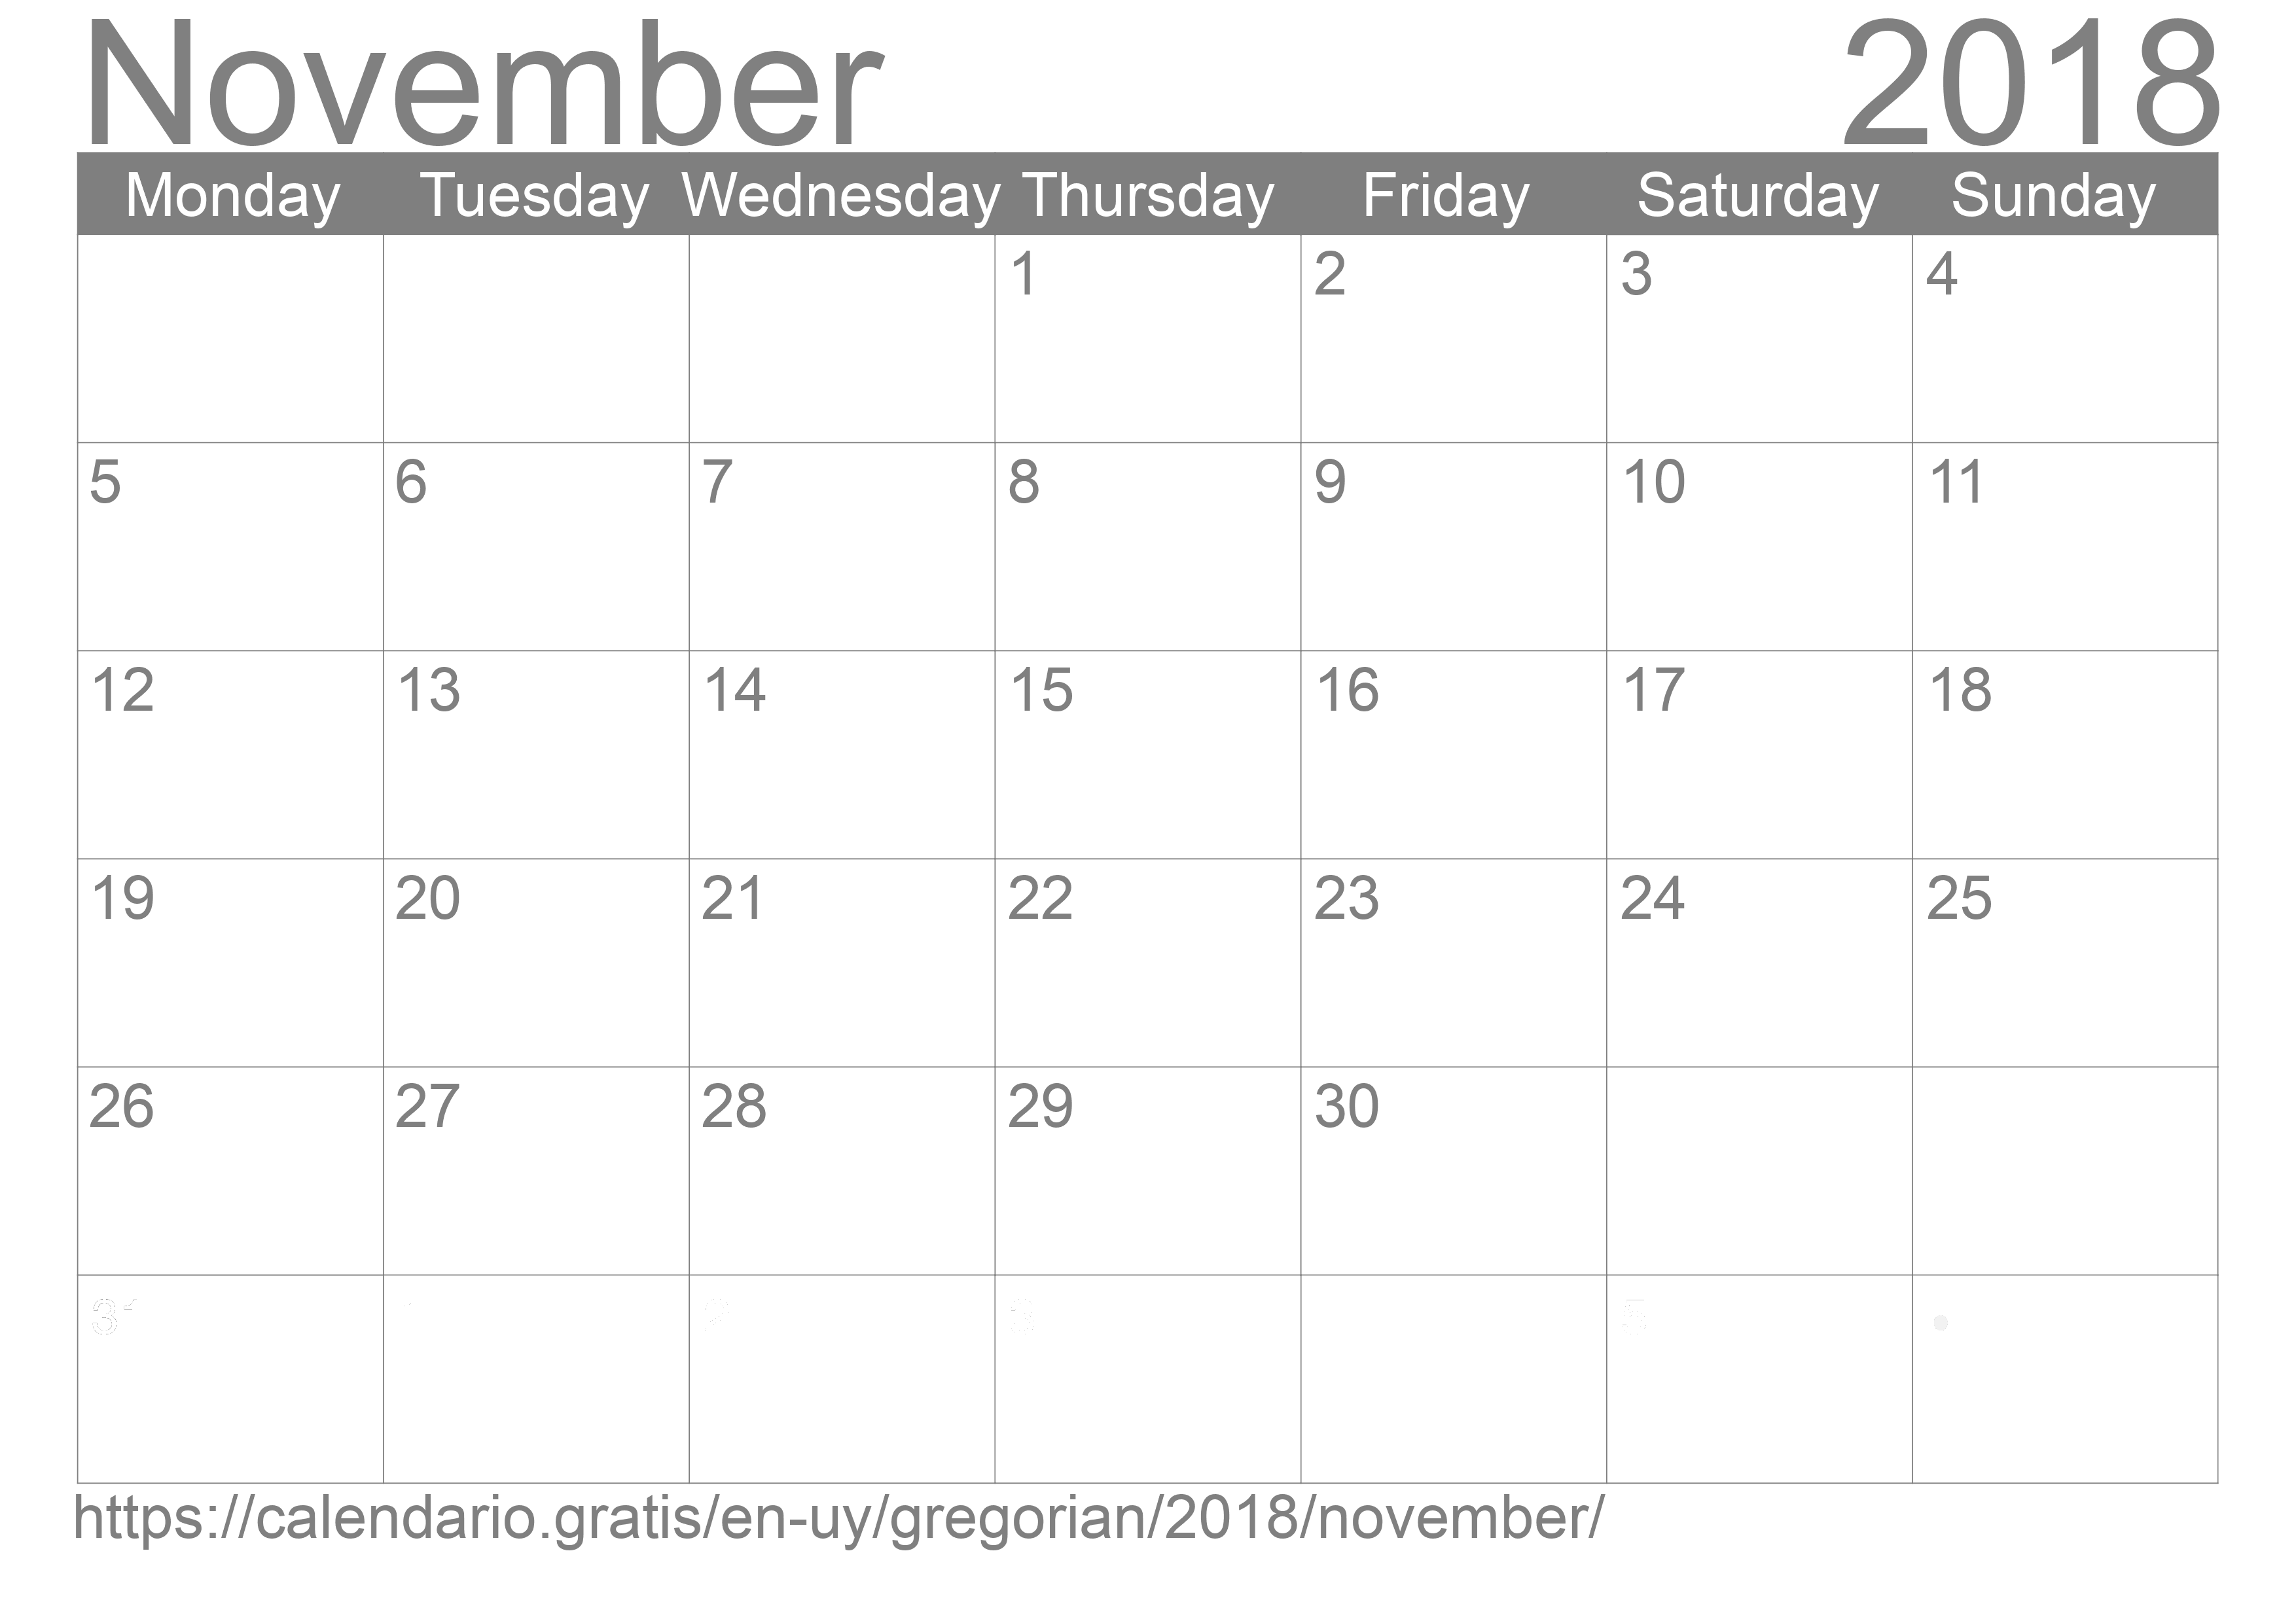 Calendar November 2018 to print